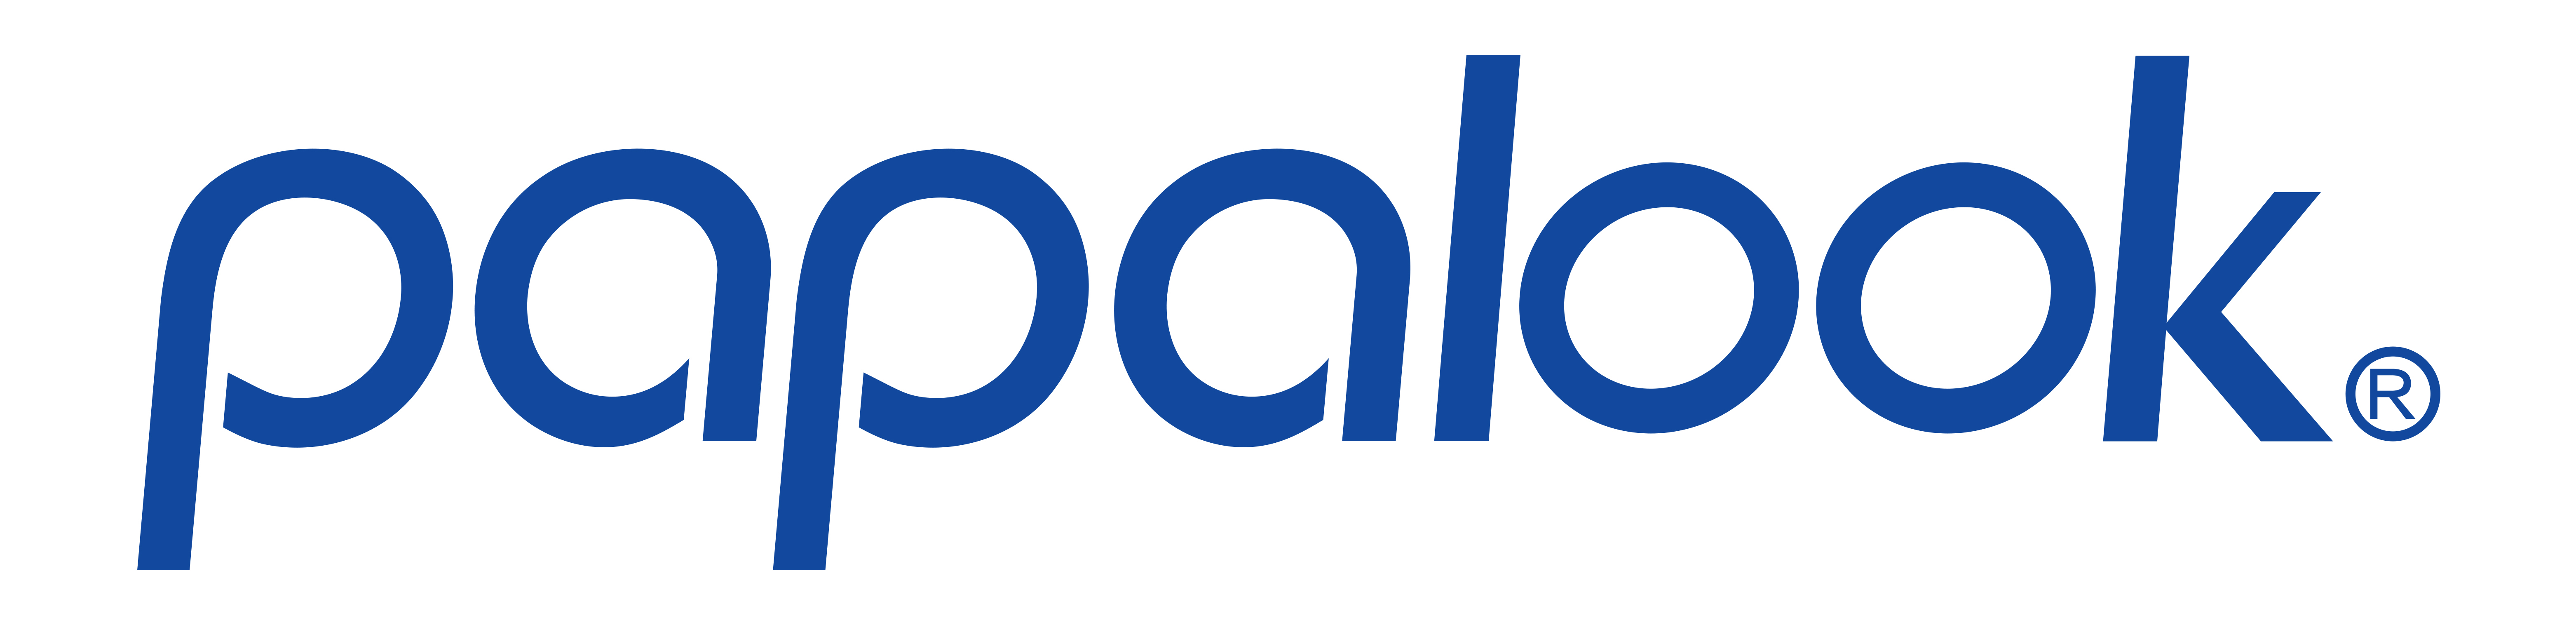 papalook Logo